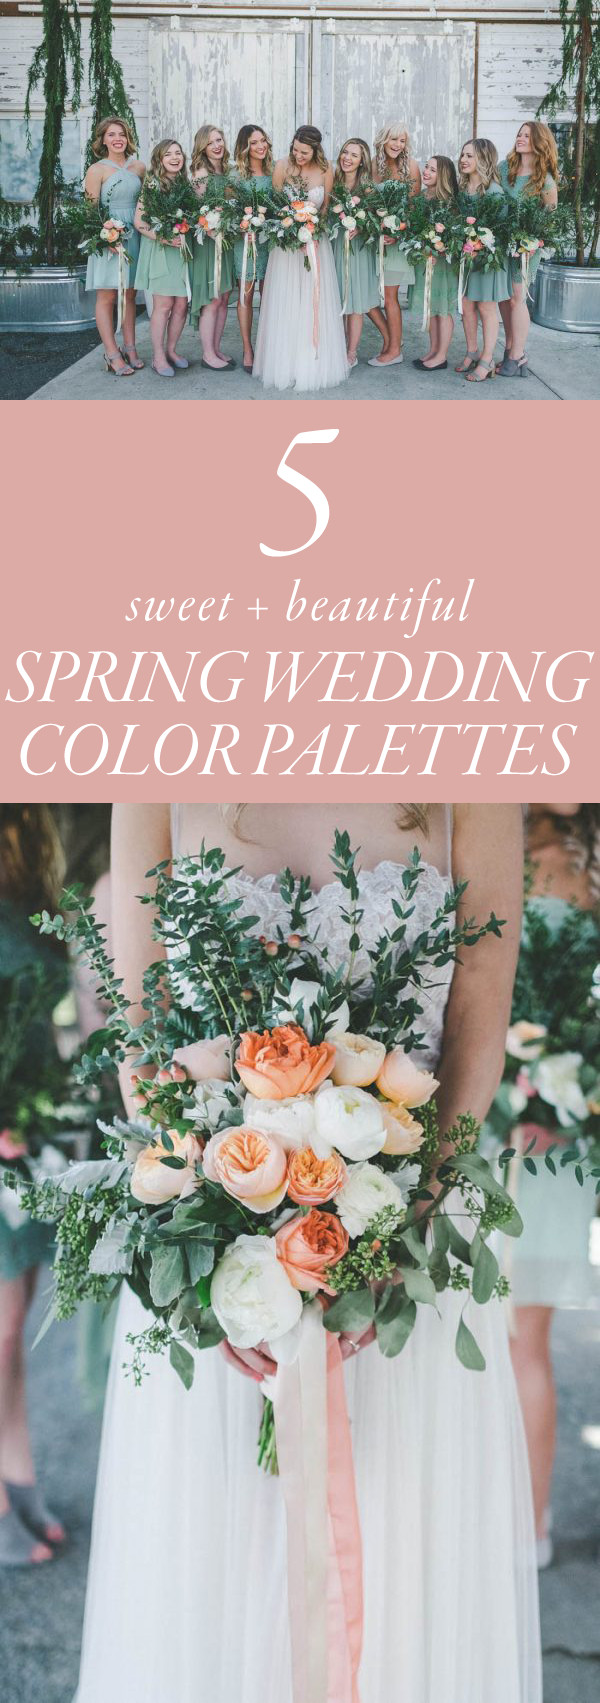 Wedding Colors Spring
 5 Sweet Spring Wedding Color Palette Ideas